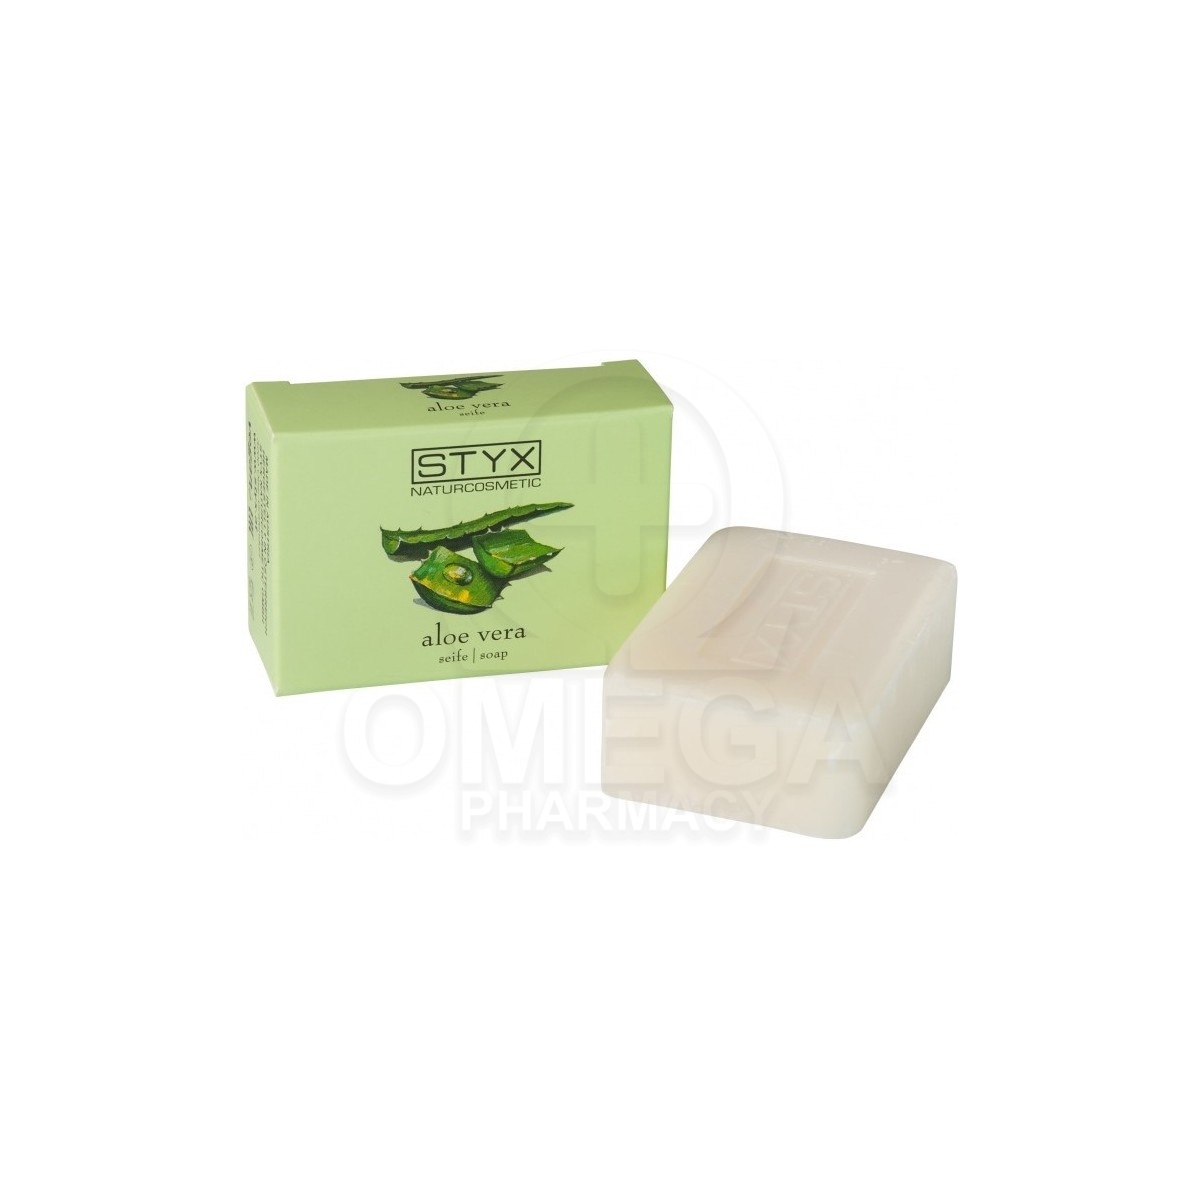 STYX Aloe Vera Soap Σαπούνι με Αλόη Βέρα 100gr